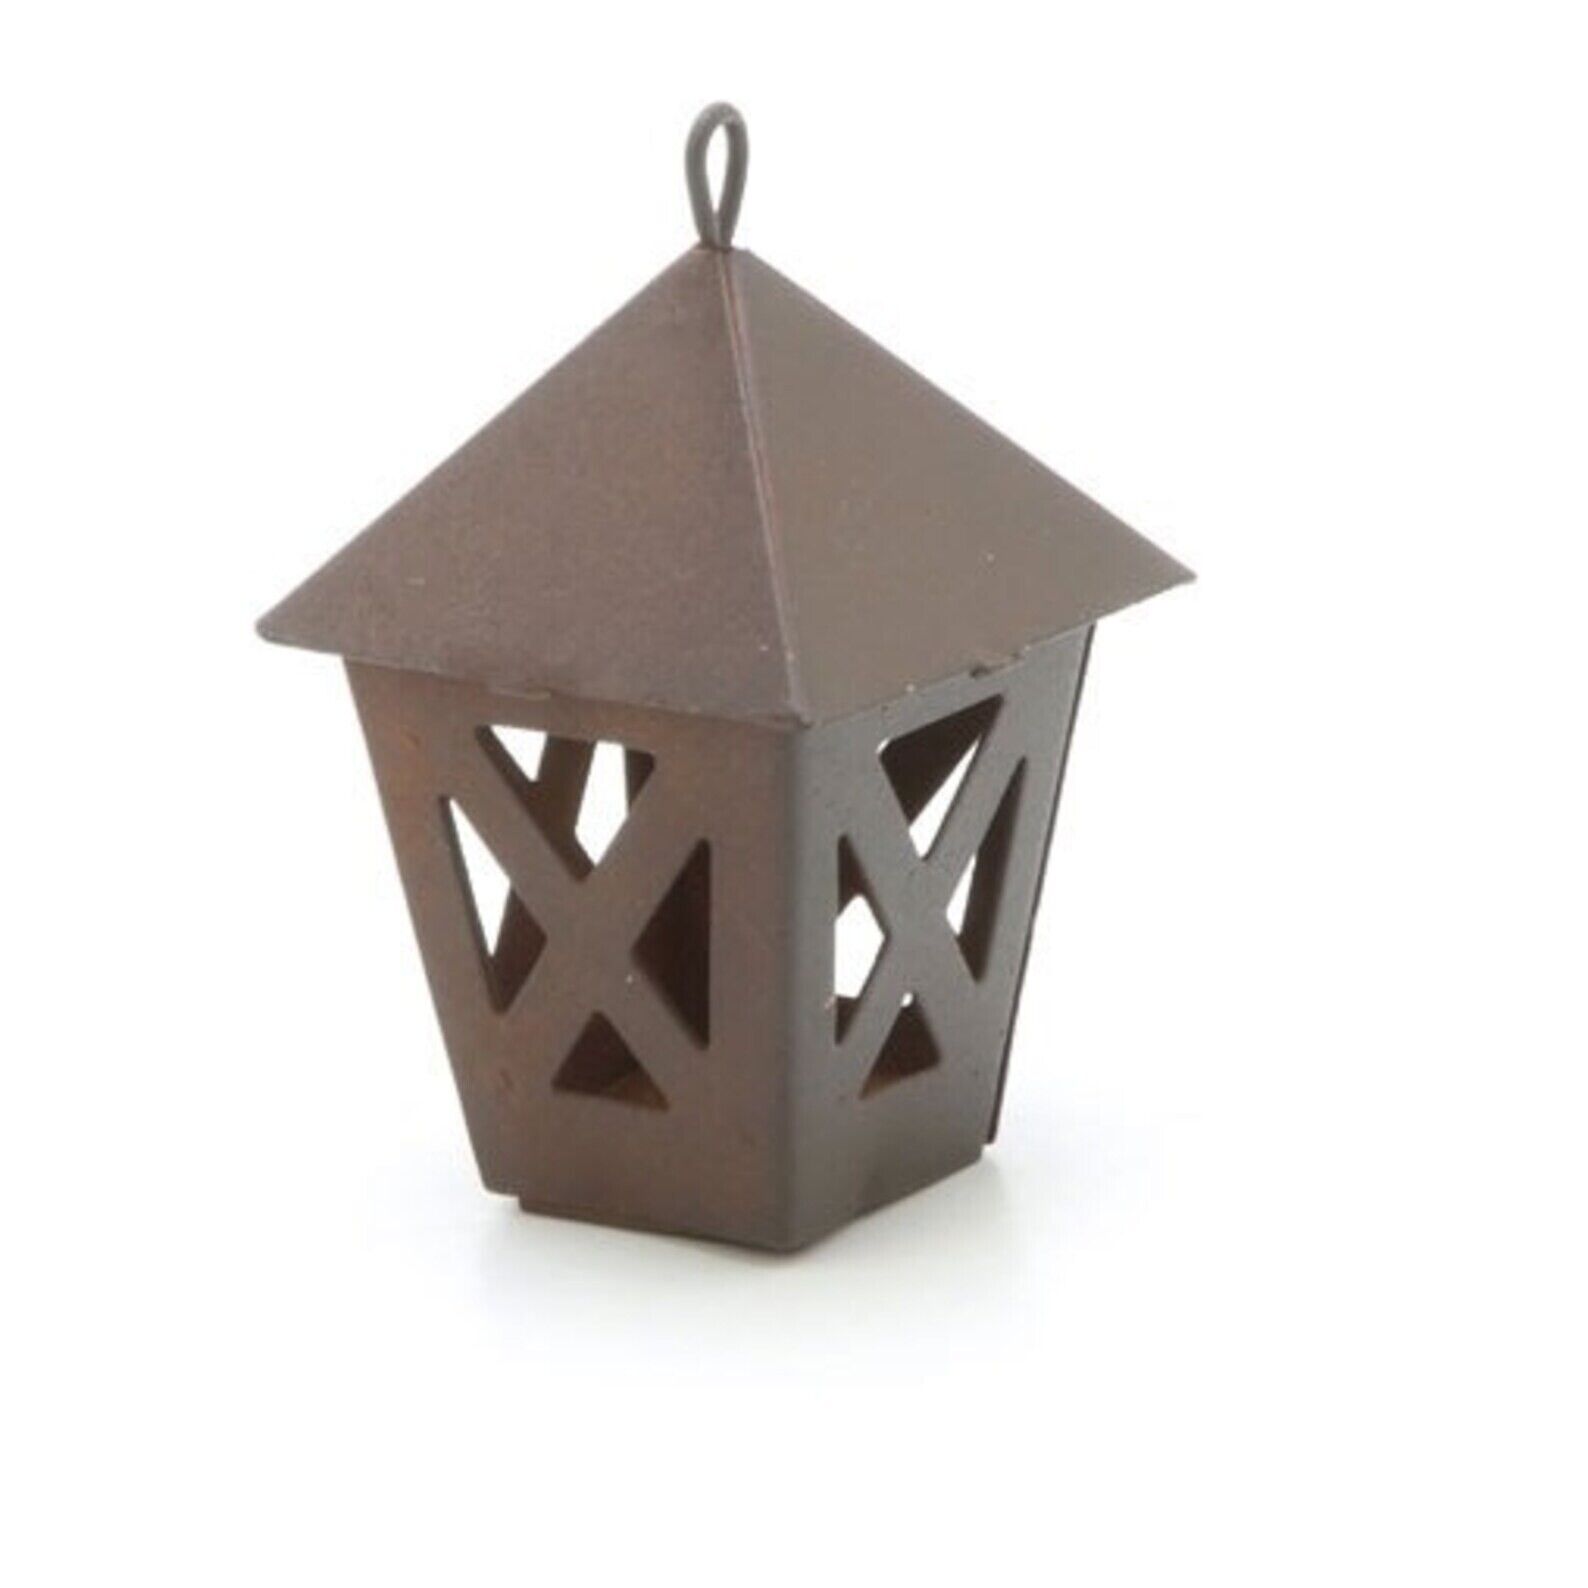 Miniature Rustic Birdhouse, use fairy garden, dollhouses, etc.